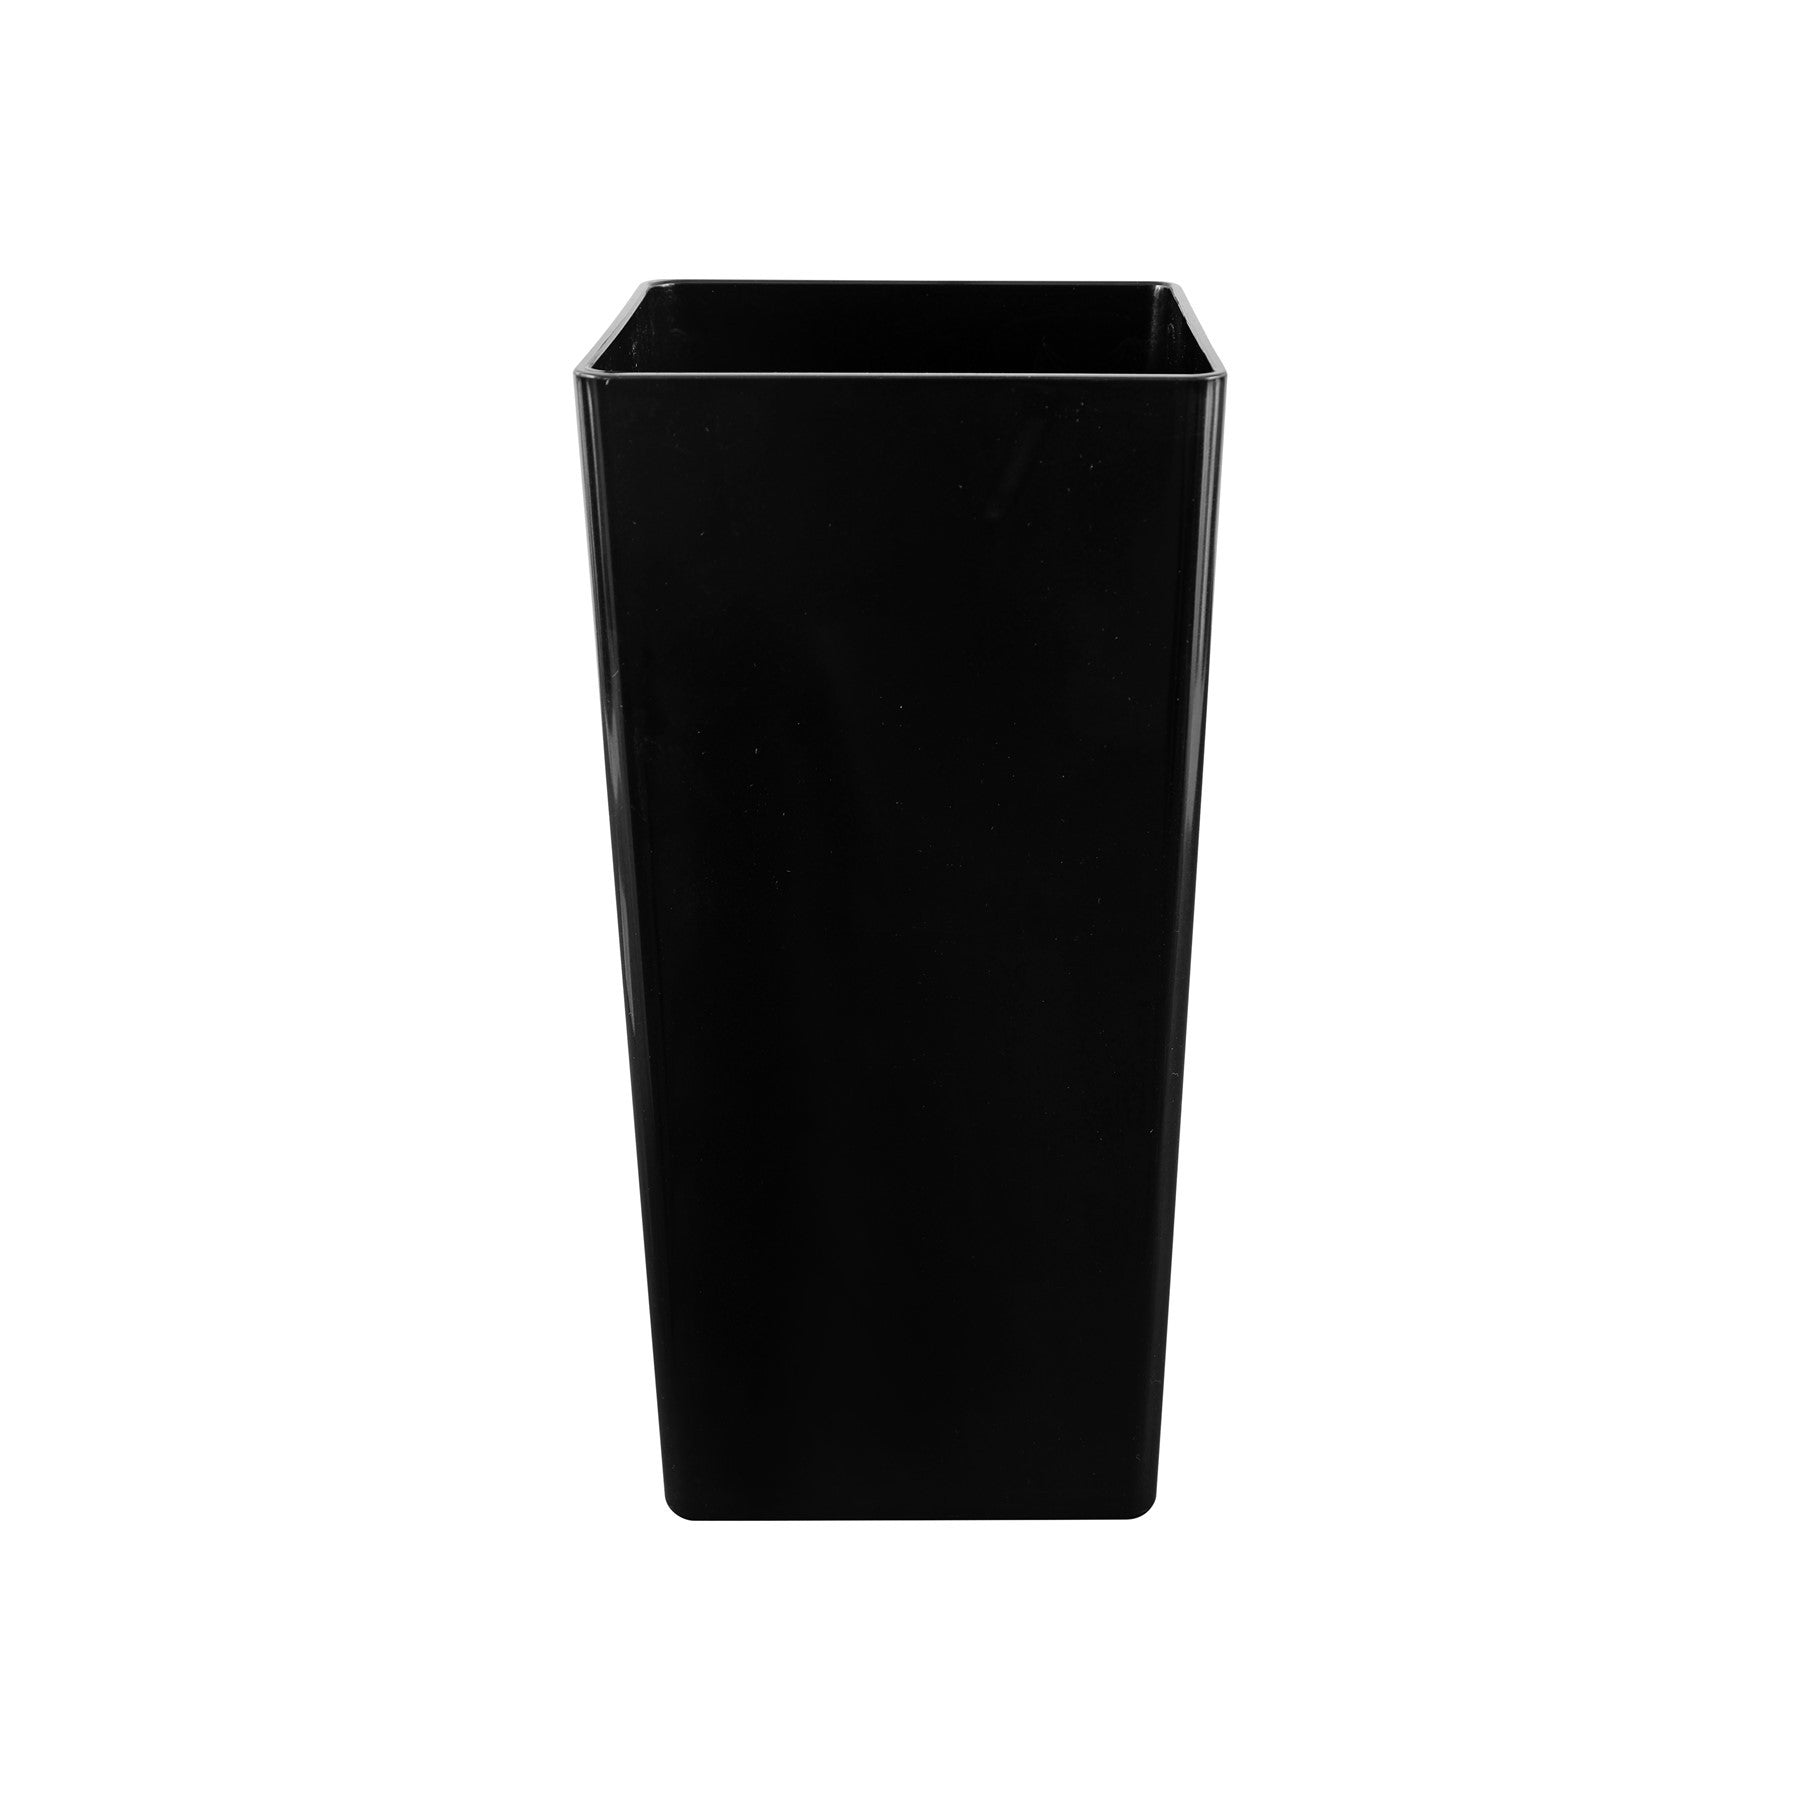 View Black Acrylic Square Vase Dia145 x H30cm information